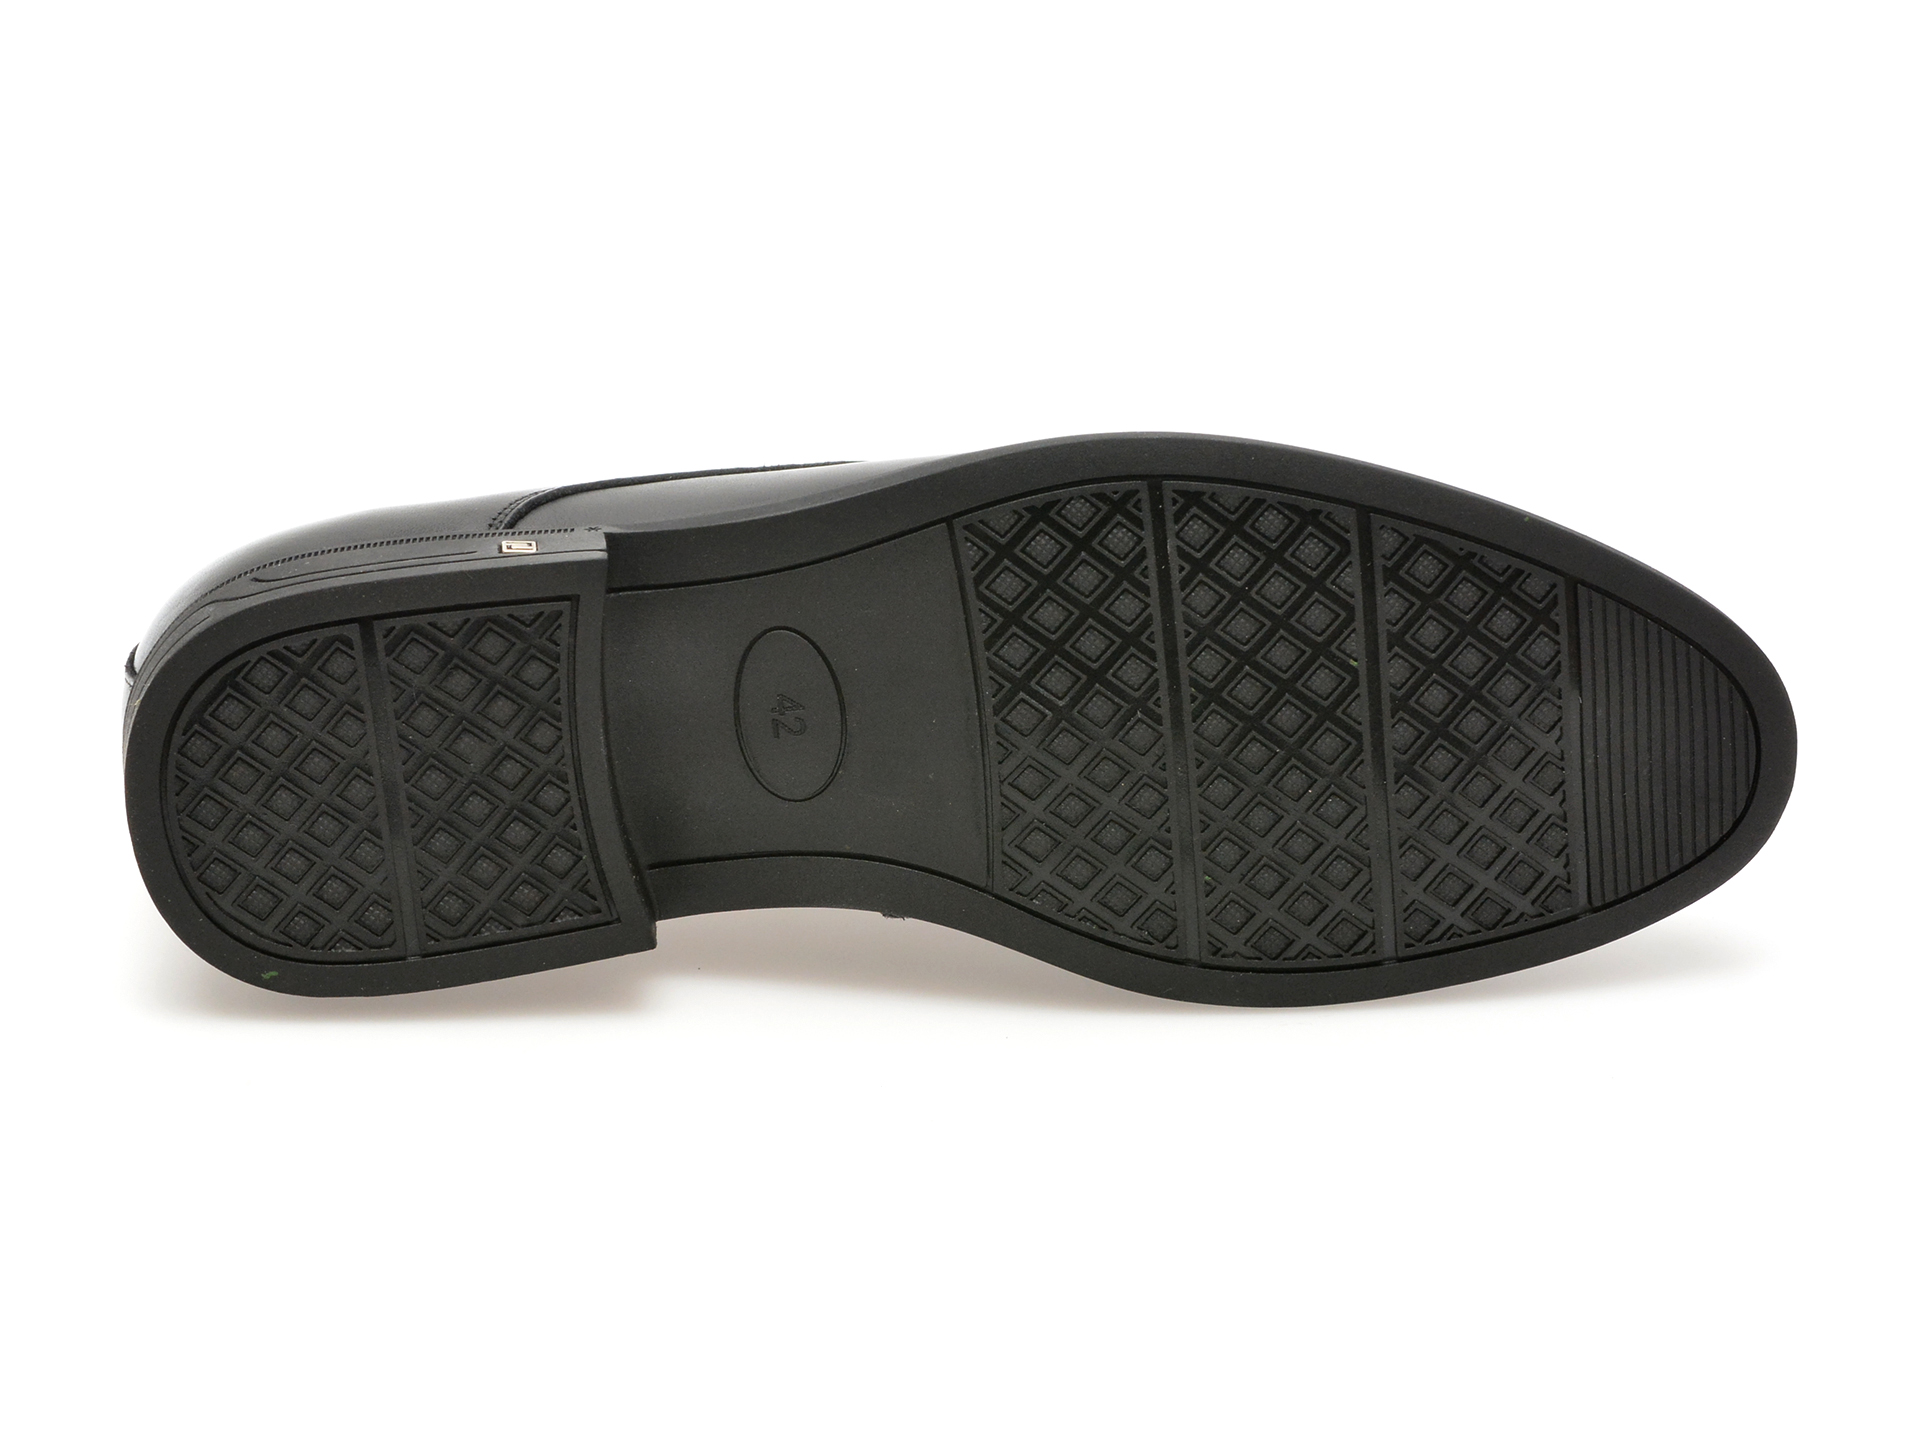 Pantofi Casual OTTER negri, 37026, din piele naturala